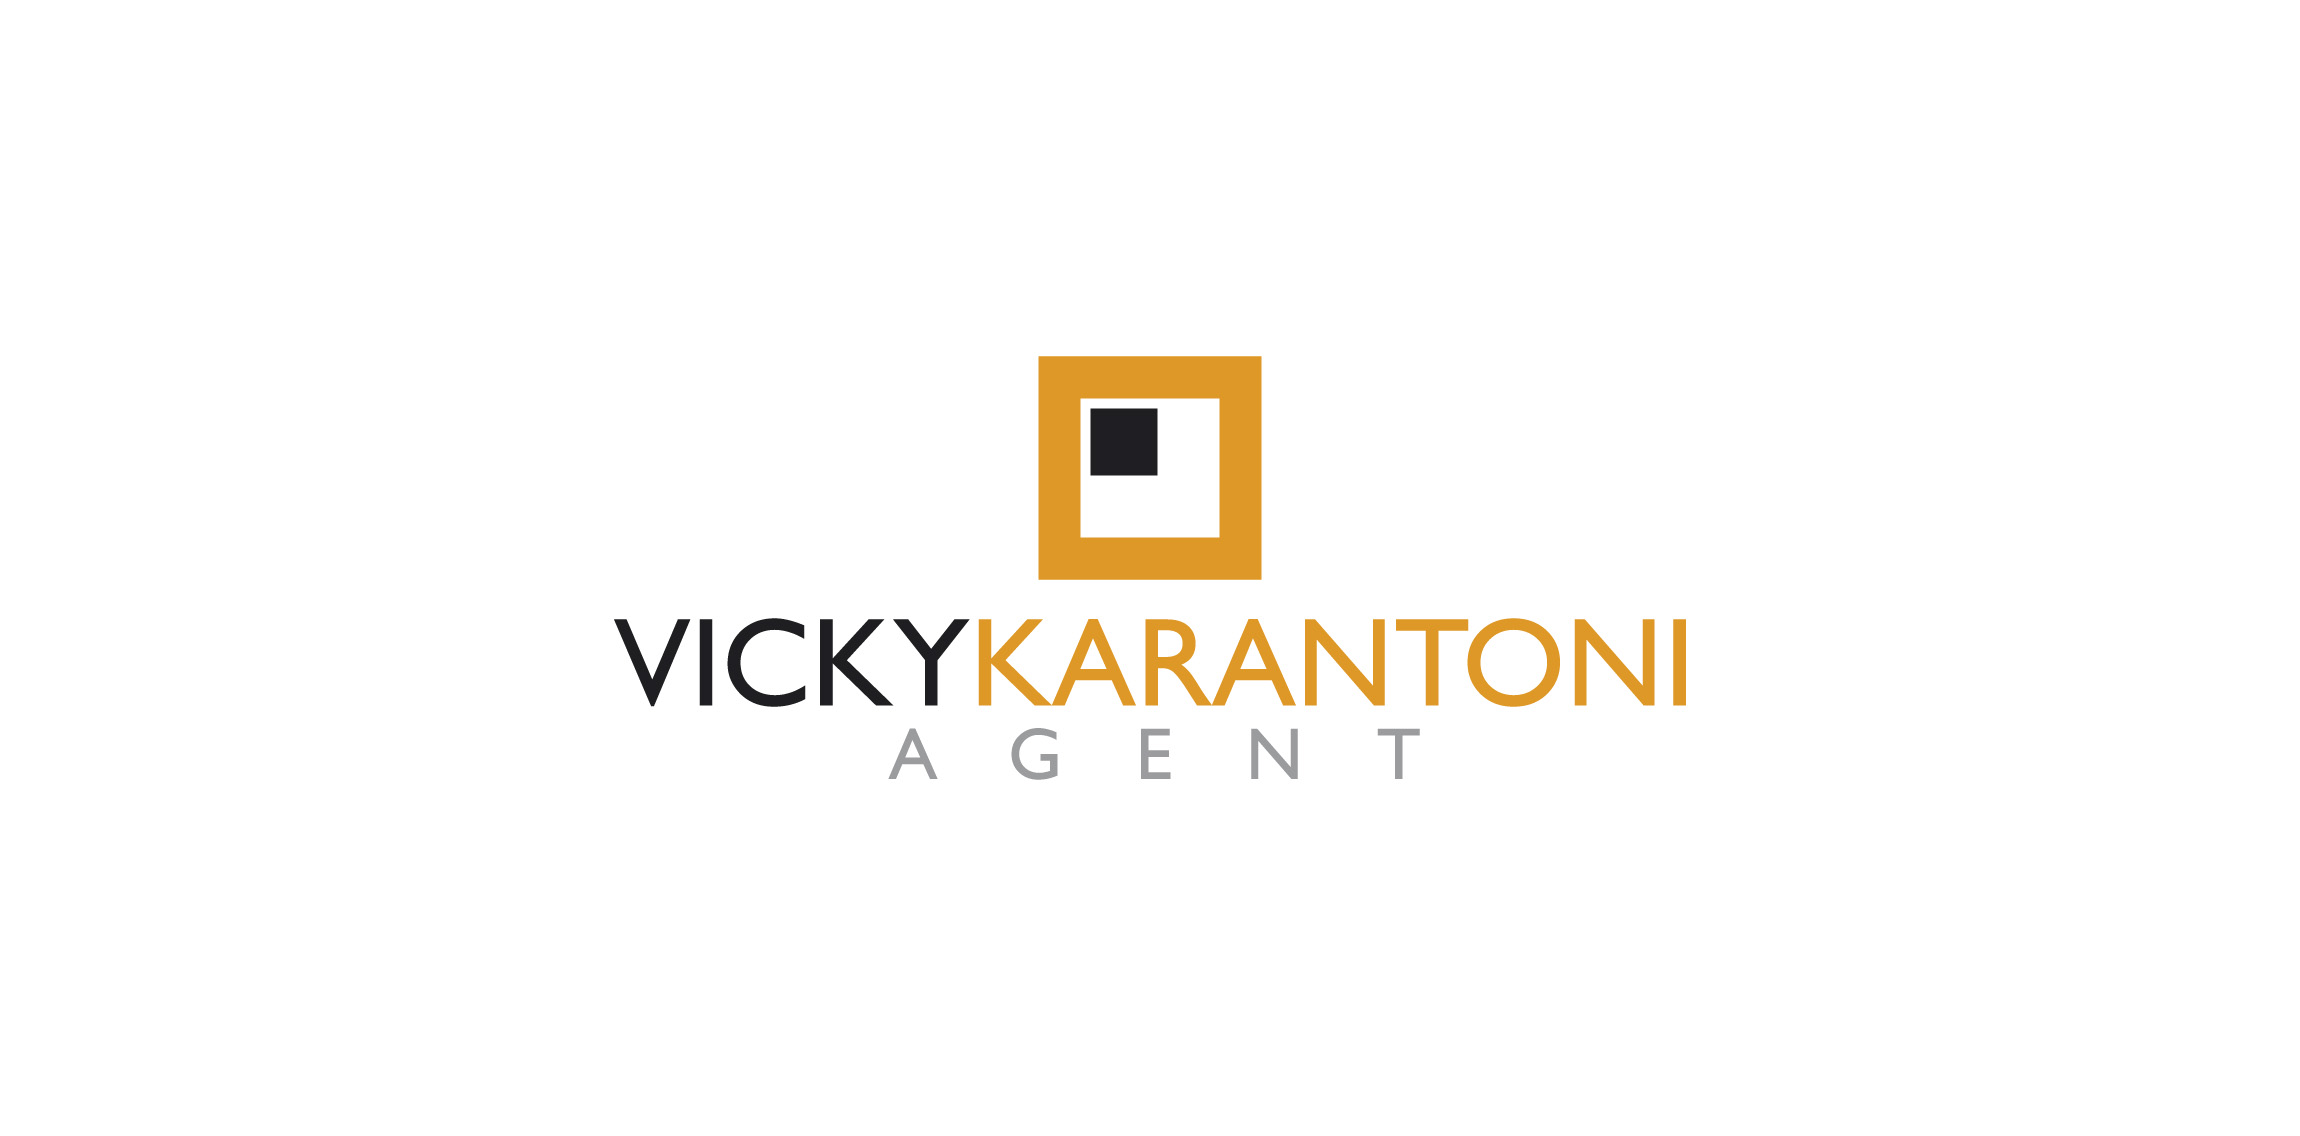 Vicky Karantoni Agent